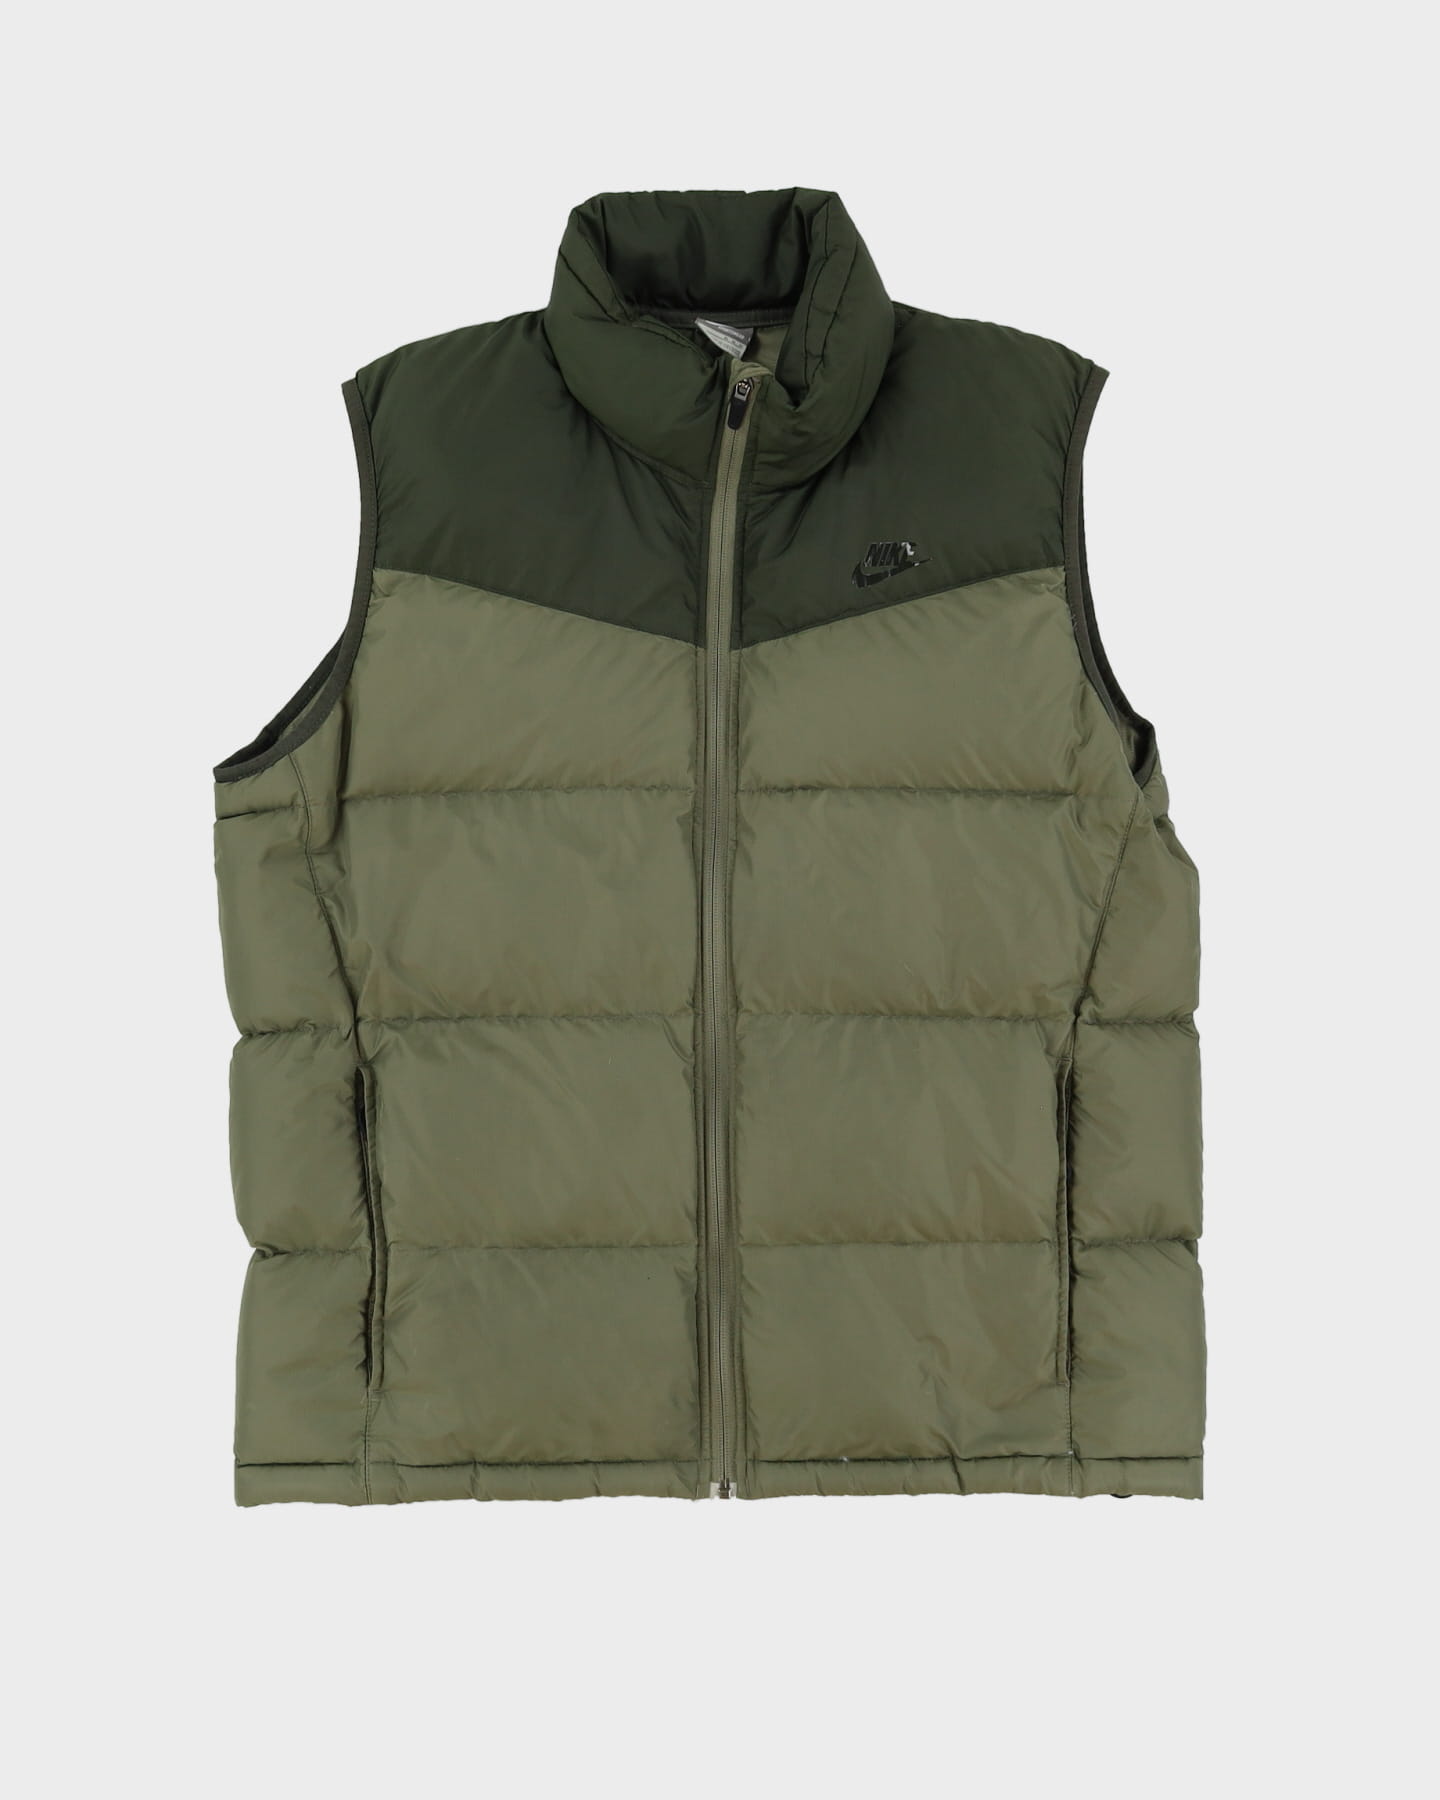 Nike Green Two Tone Sleeveless Puffer Jacket / Gilet - M